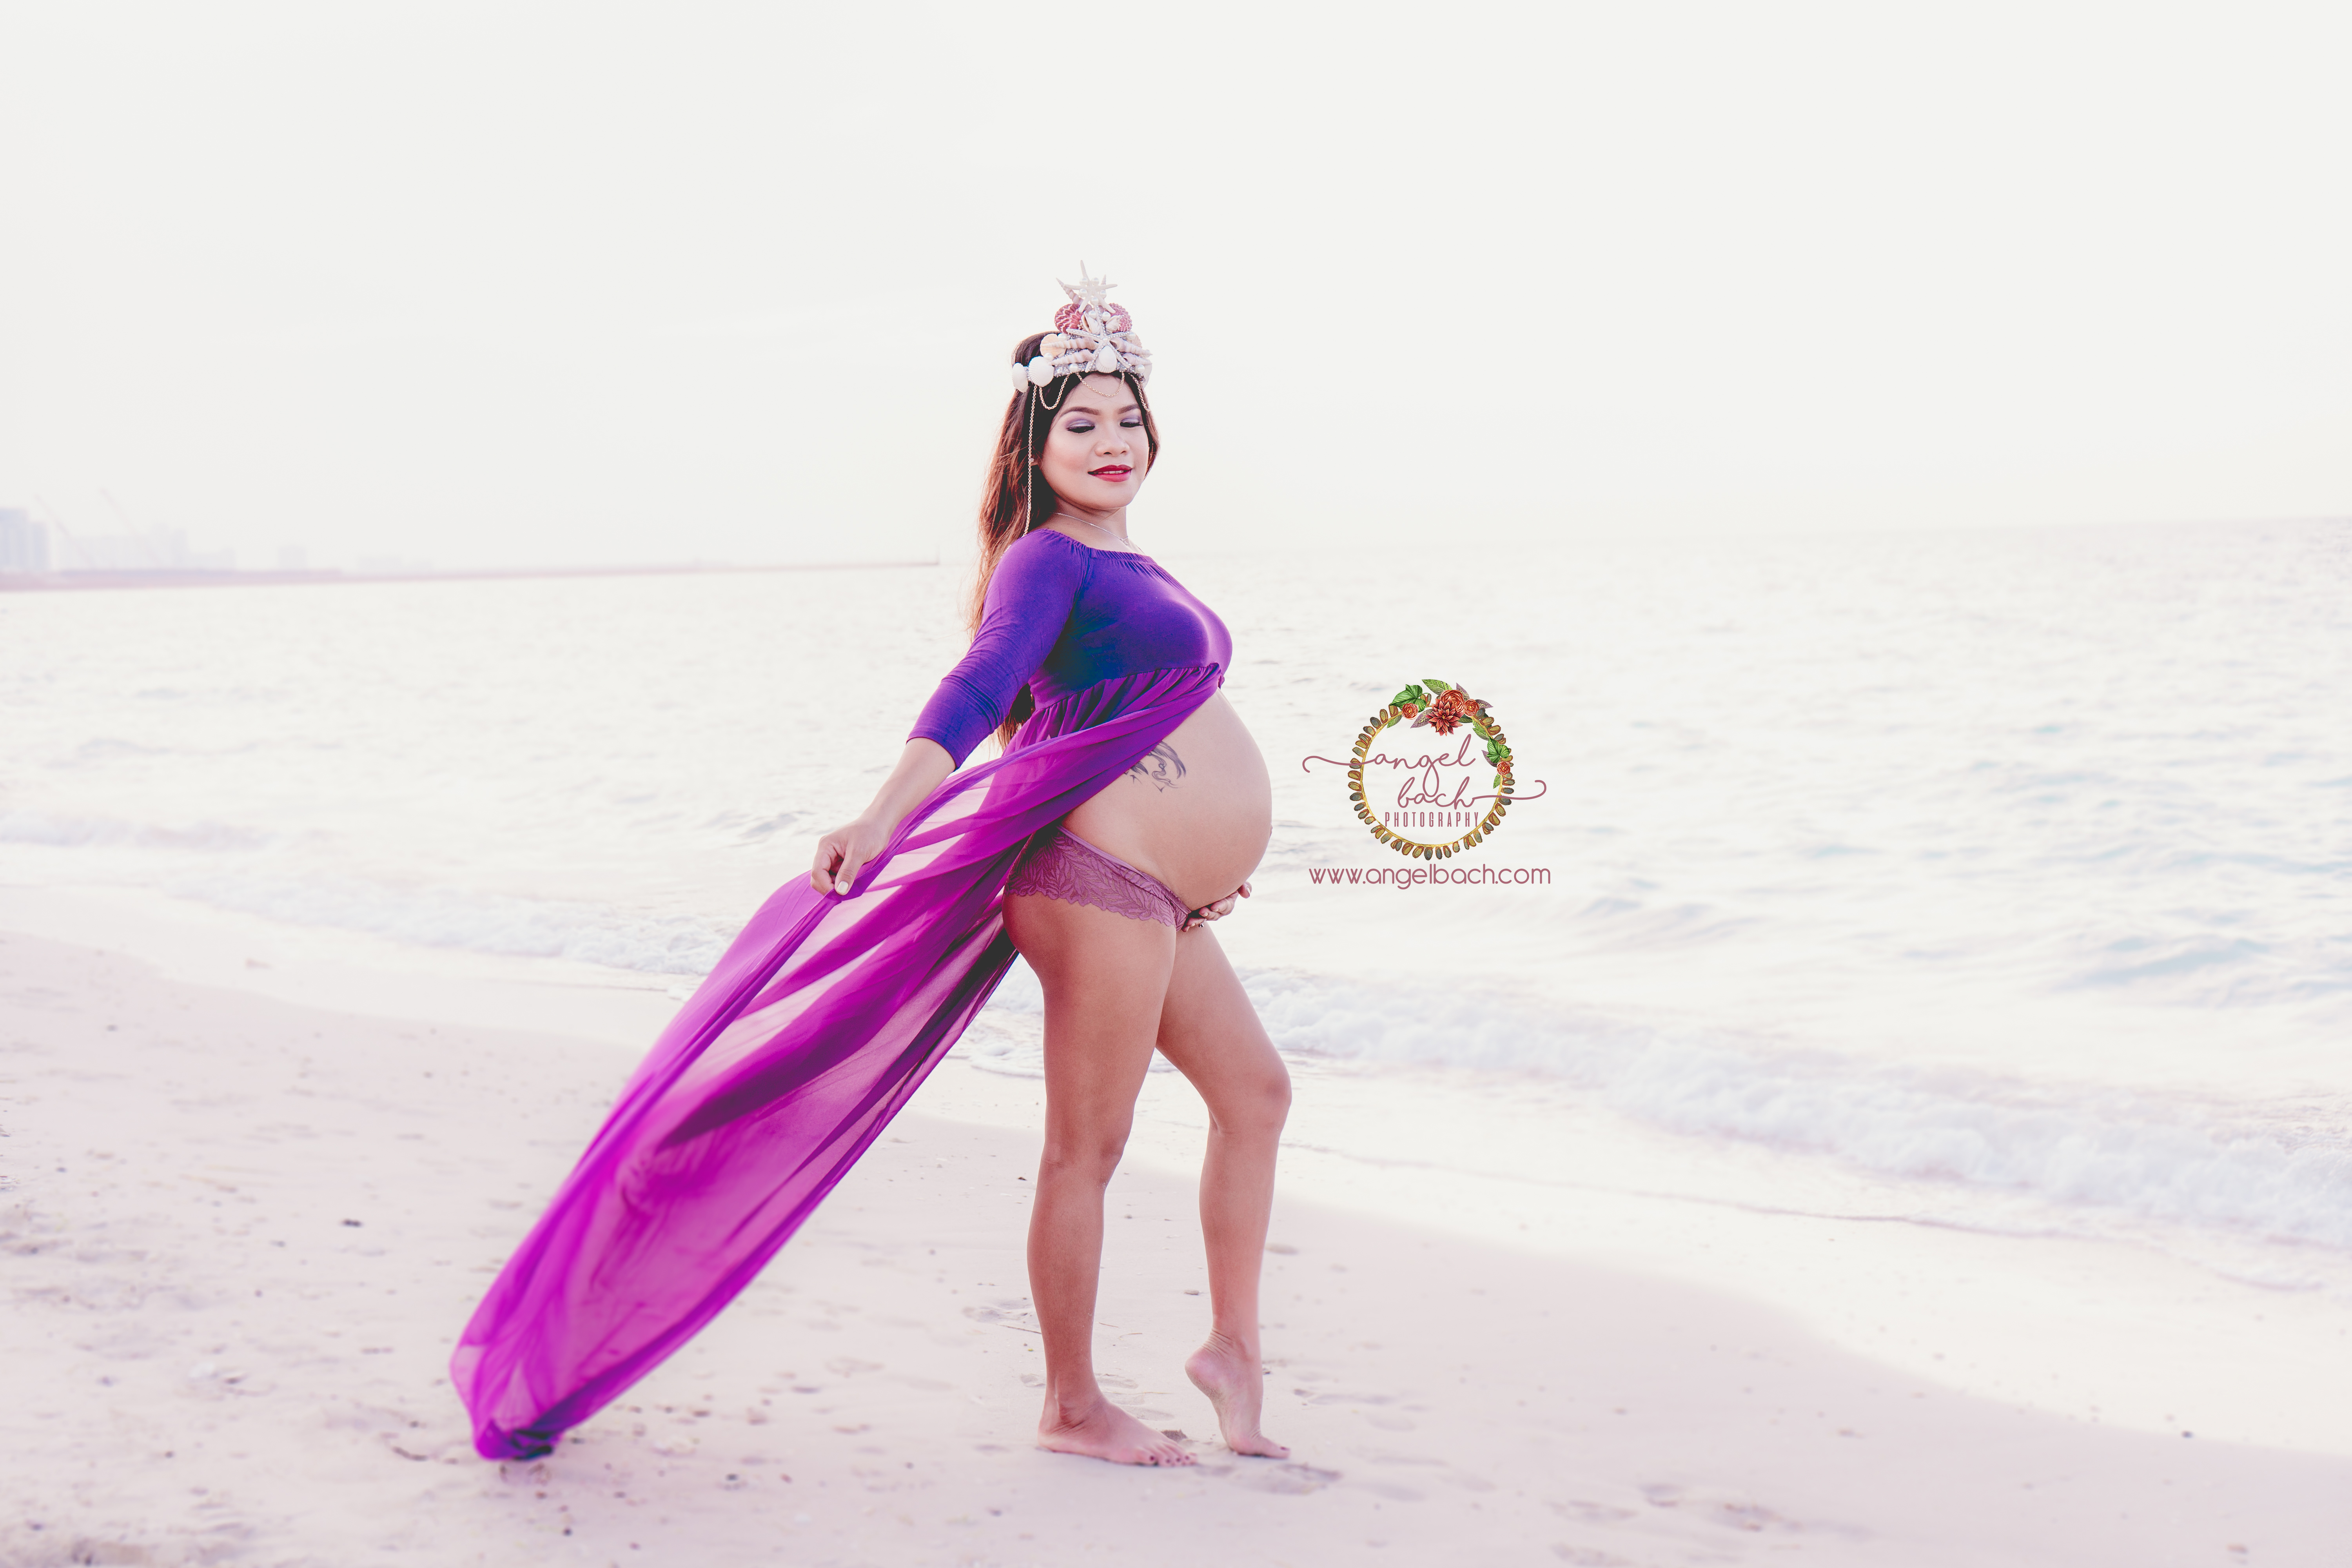 Mermaid pregnant, Beach maternity,  Maternity Photoshoot, Pregnancy, 34 weeks pregnant, pinay mom, Maternity clothes, Mermaid Crown, Tiara, Beautiful Pregnant, Photography, pregnancy glow, Boho queen